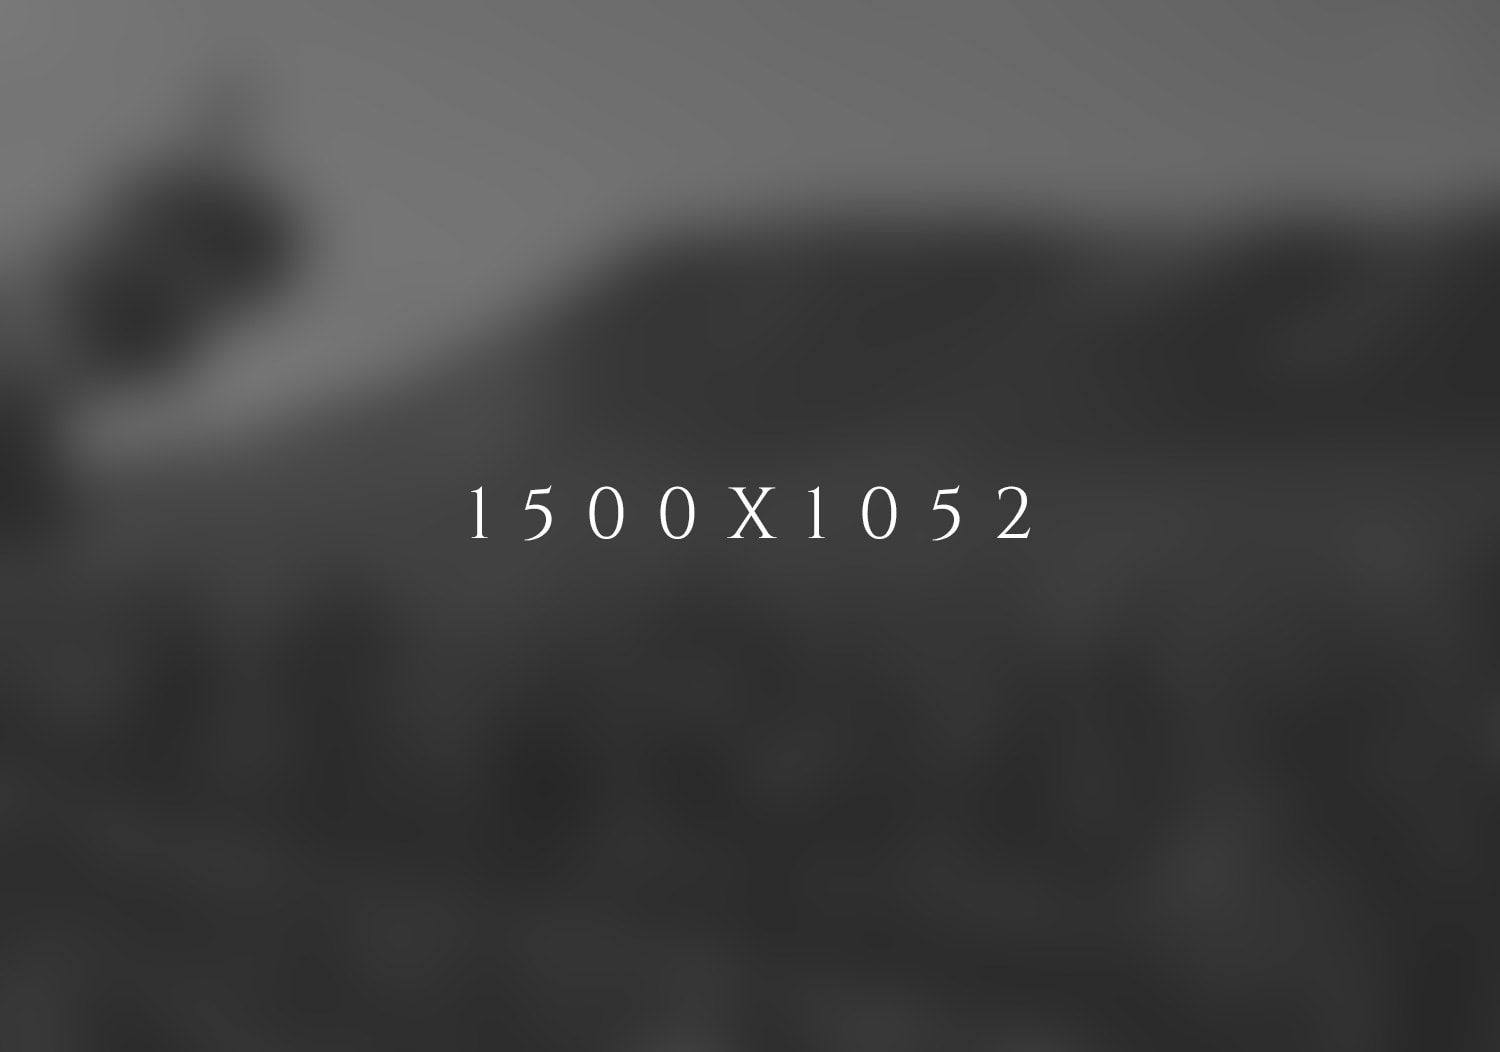 1500x1052-min - Copy (12).jpg